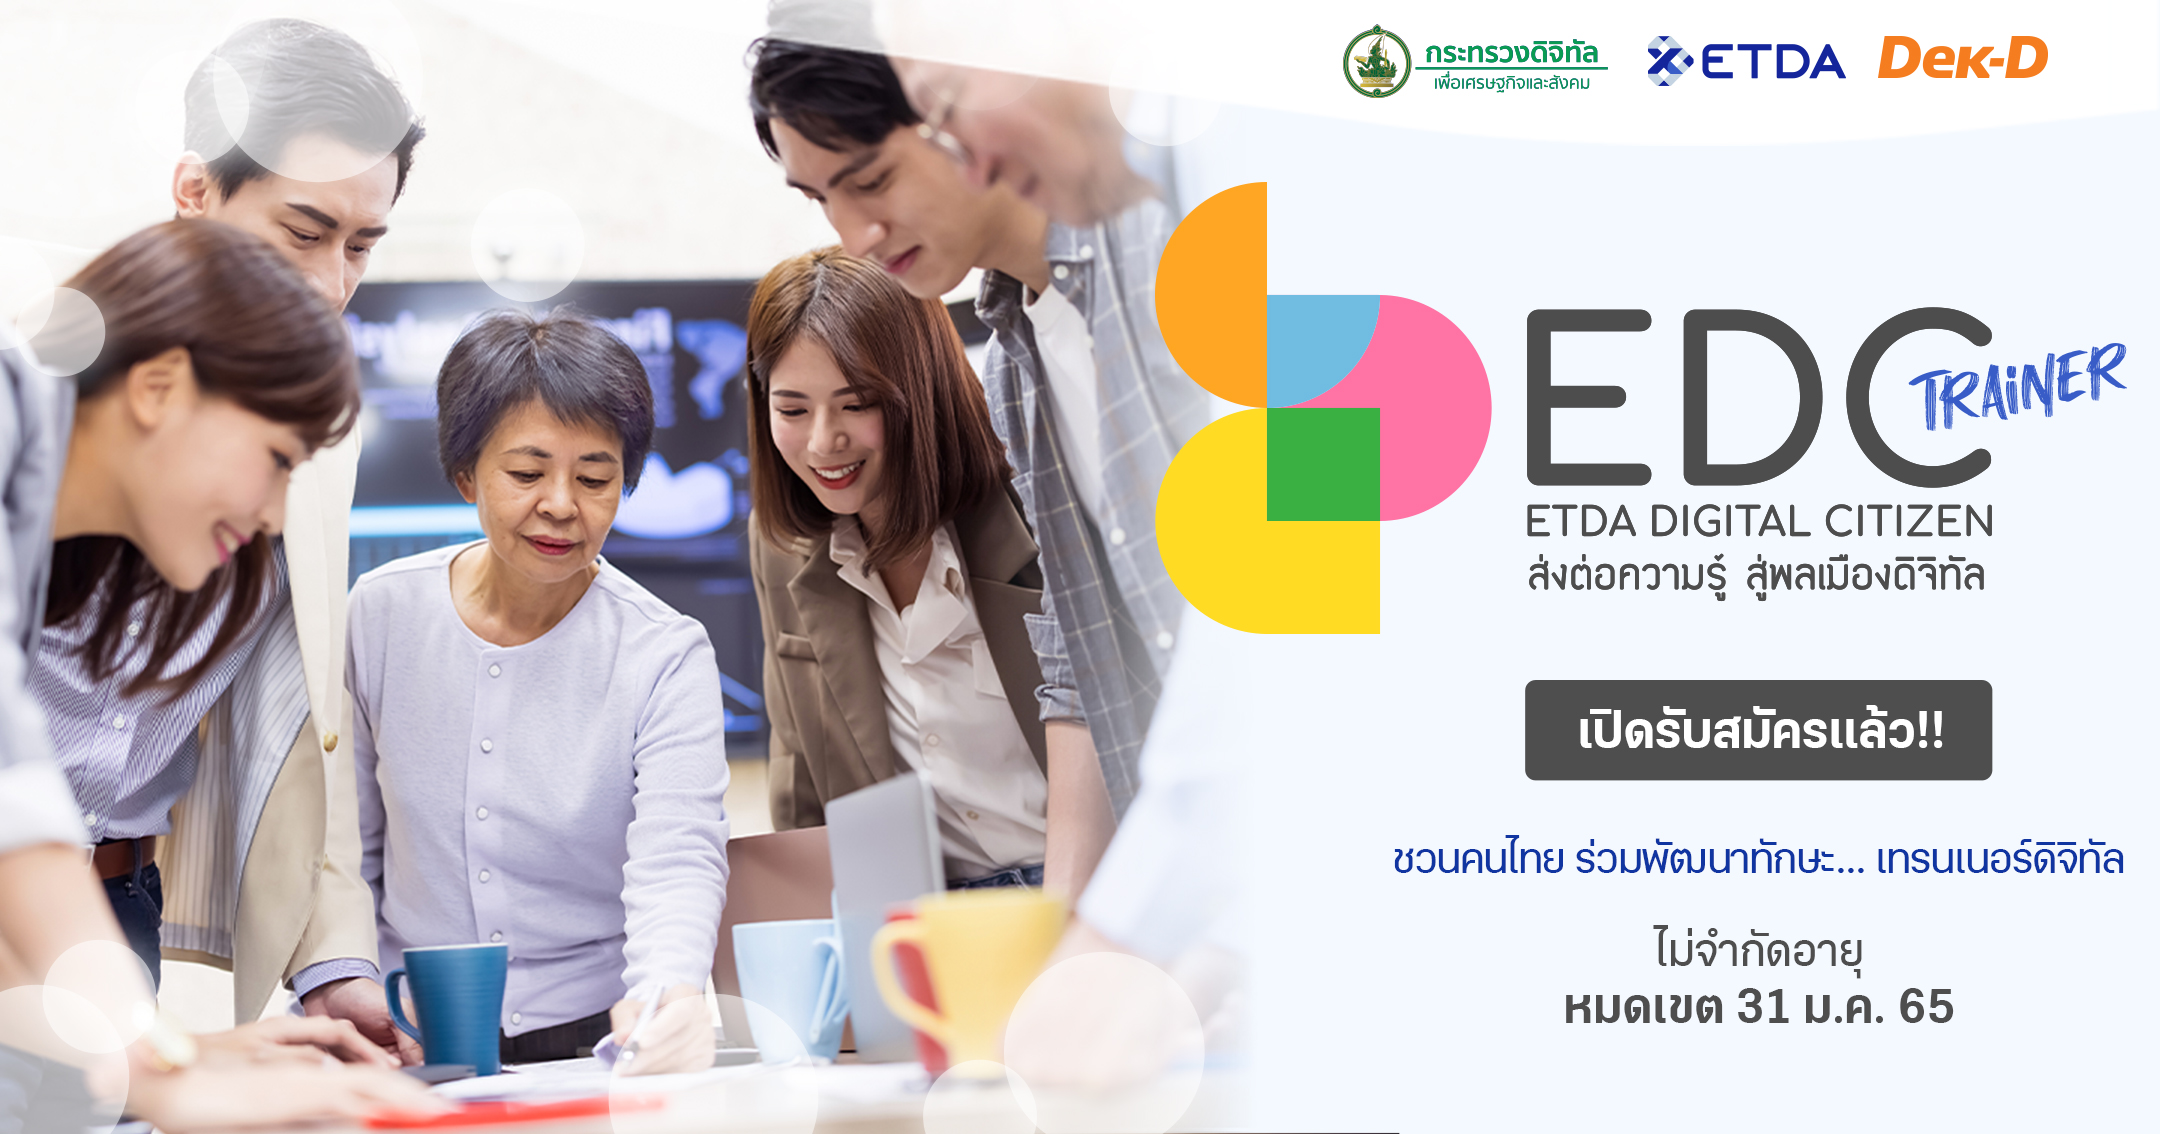 ETDA จับมือ Dek-D เปิดโปรเจก ETDA Digital Citizen Trainer ปั้นคนไทย สู่เทรนเนอร์ดิจิทัล ส่งต่อความรู้สู่สังคม